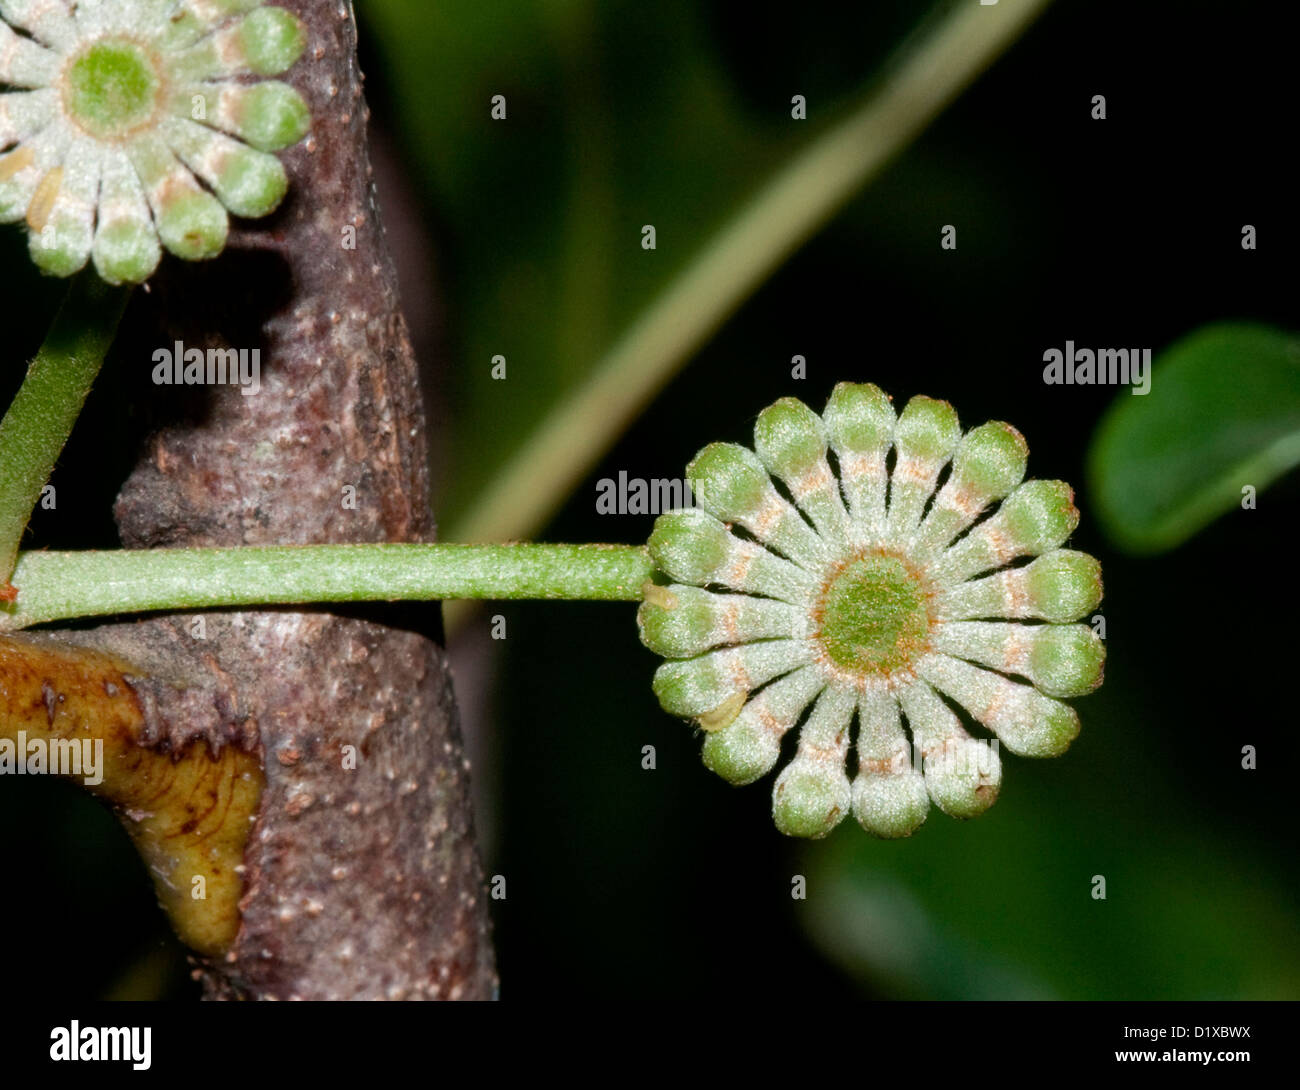 Wheel shaped flower buds of Stenocarpus sinuatus - Queensland firewheel tree, and Australian native plant Stock Photo